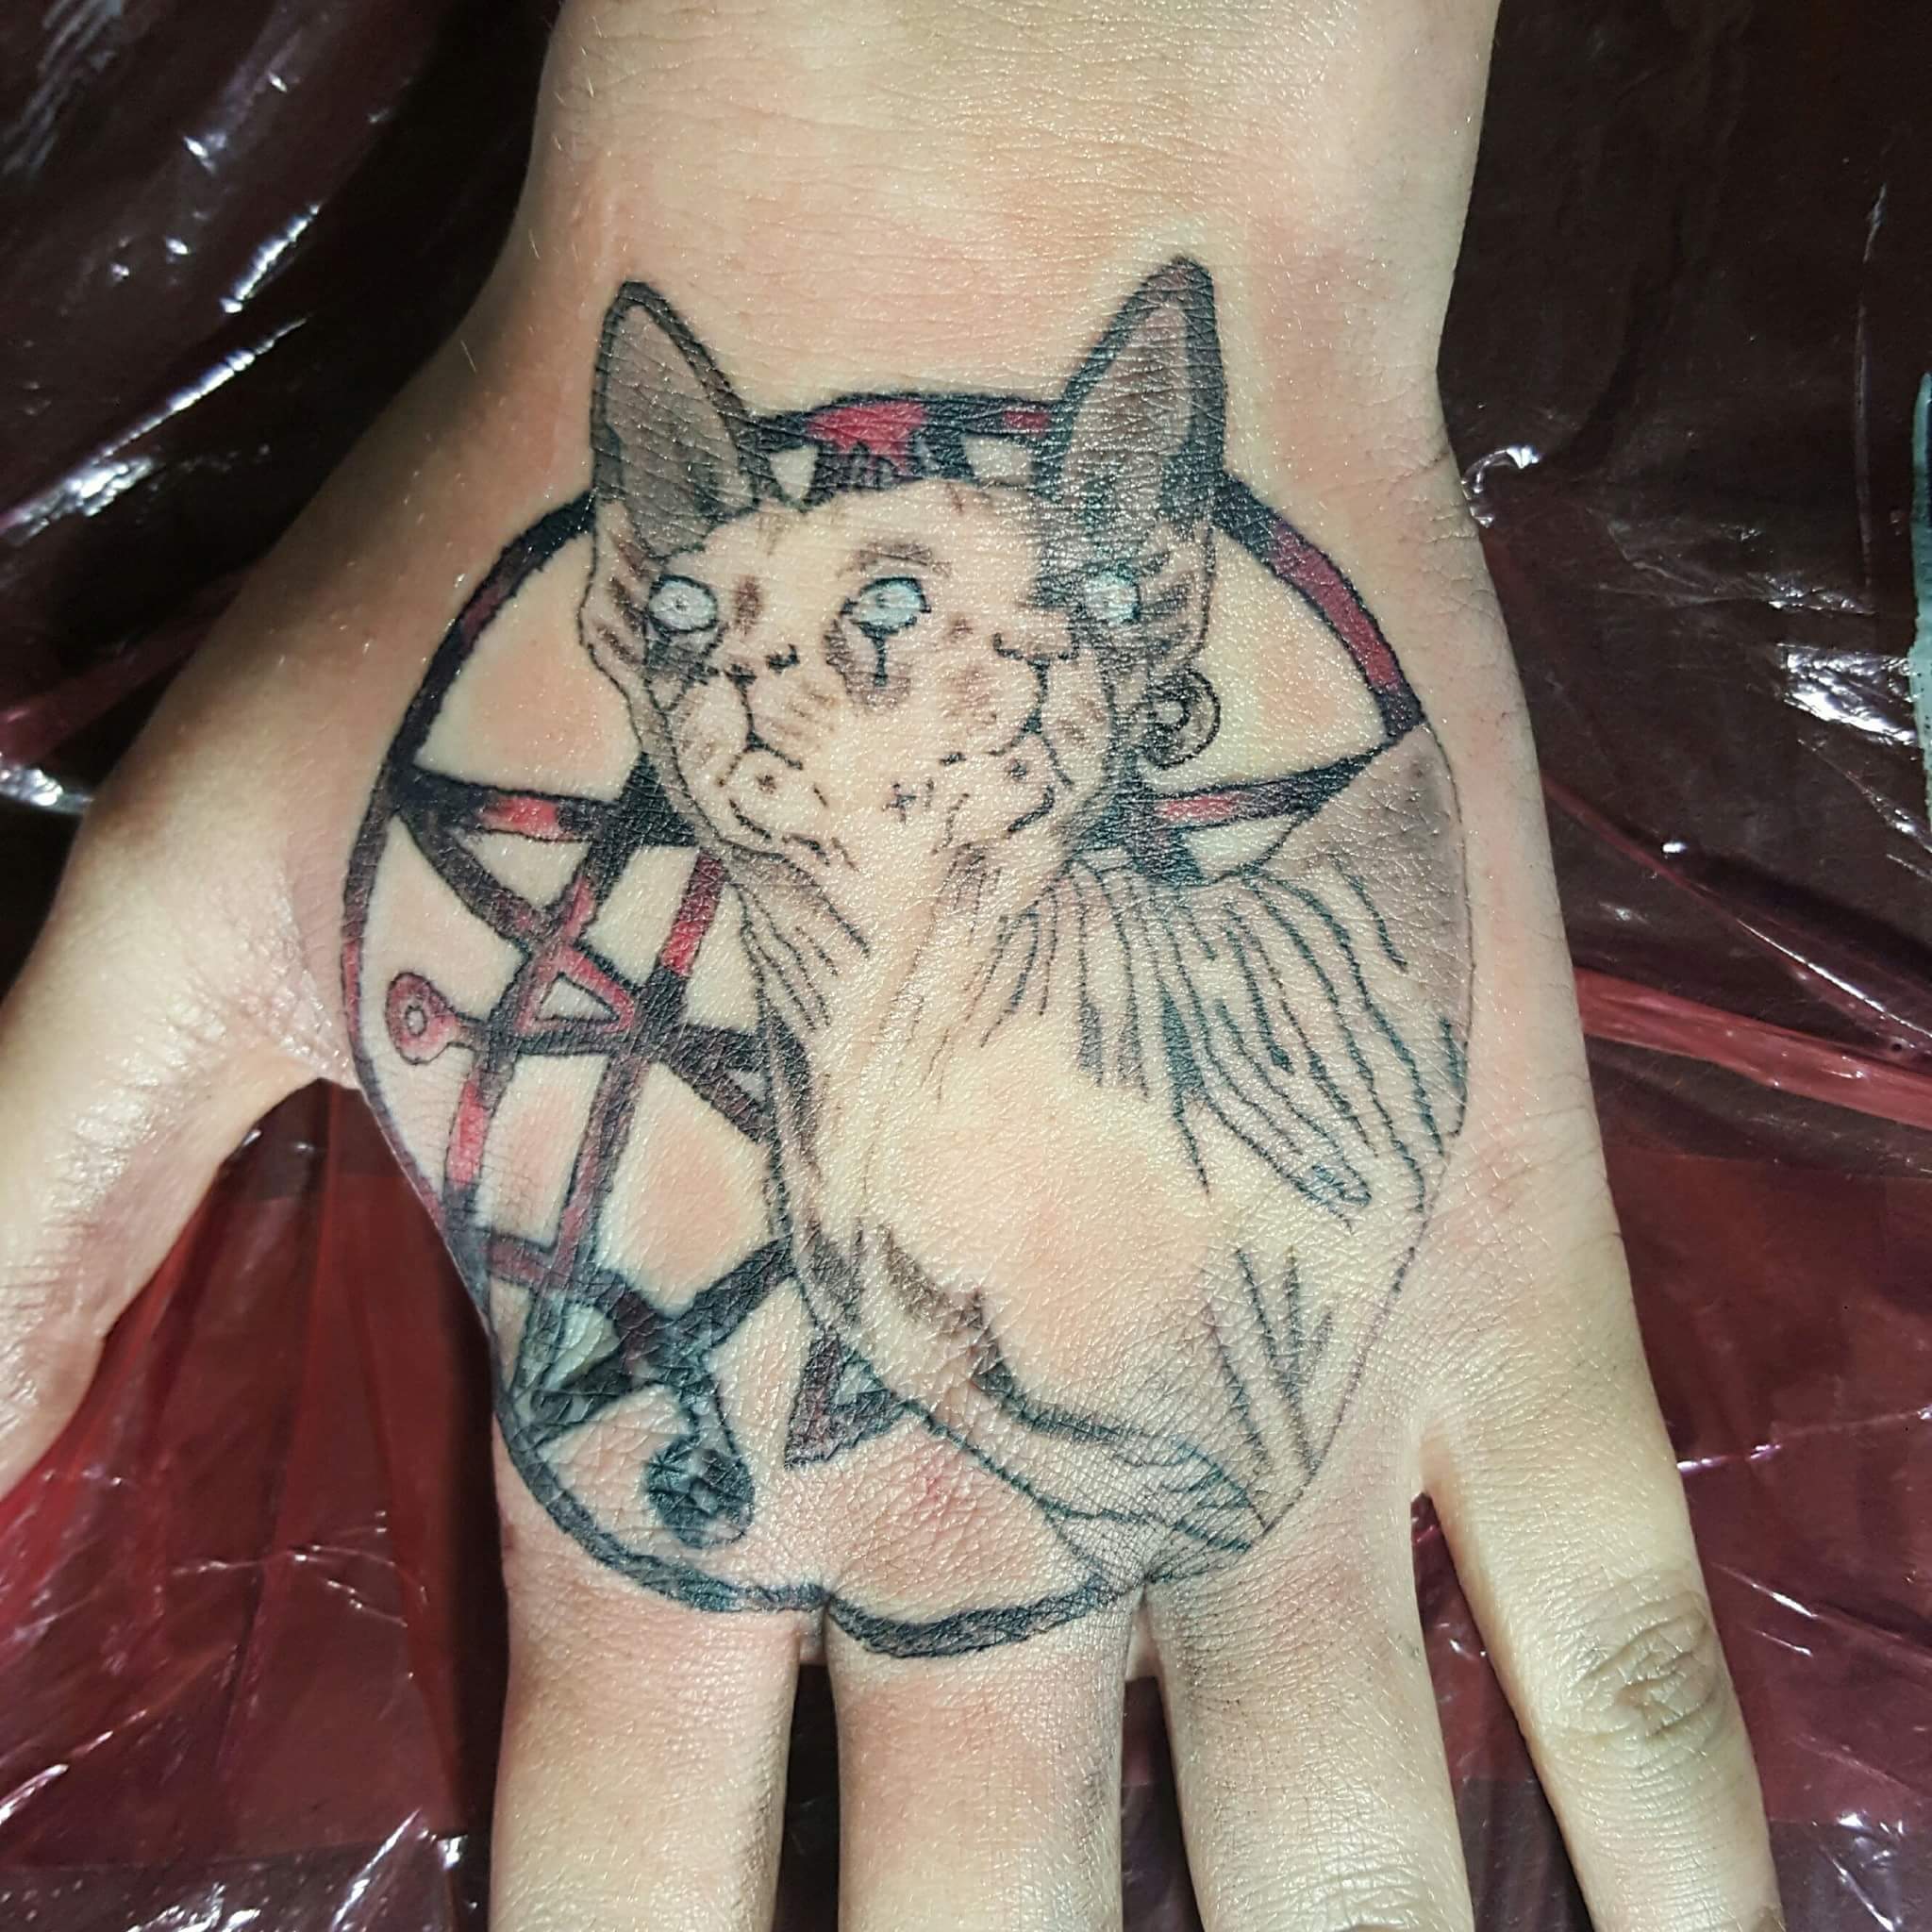 Satan's cat tattoo on someone's hand